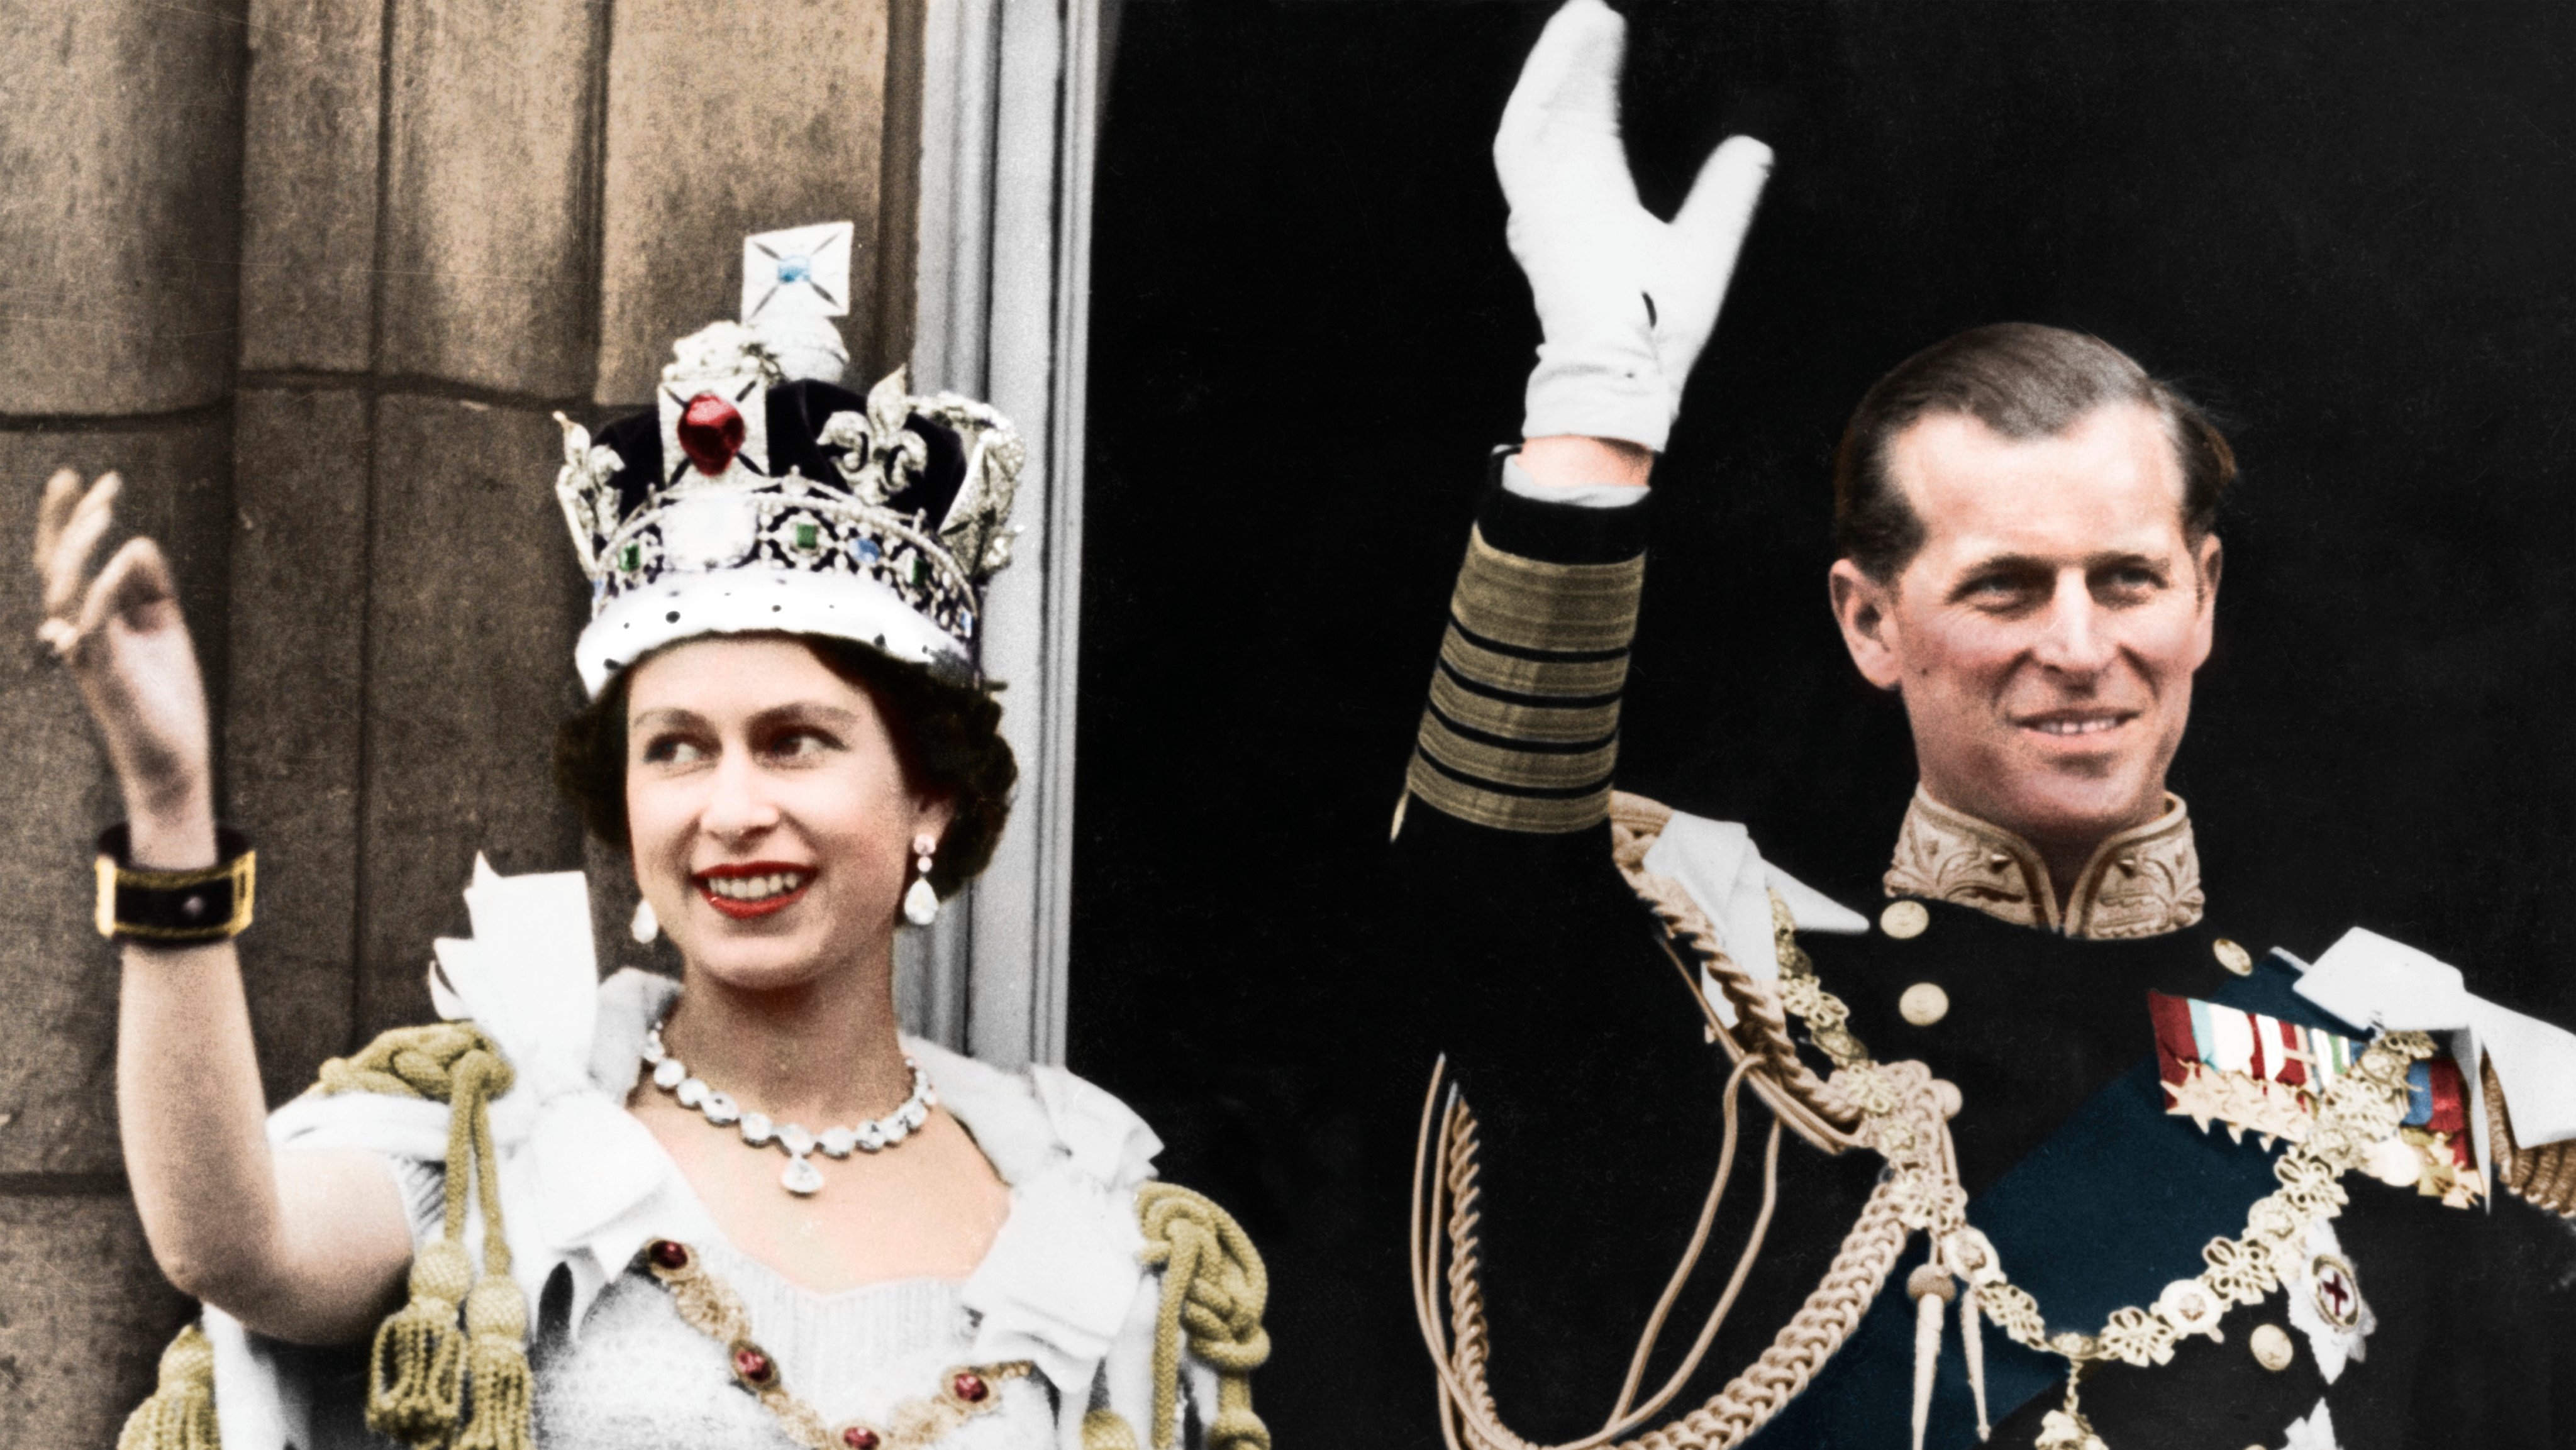 Queen Elizabeth Ii And The Duke Of Edinburgh On Their Coronation Day